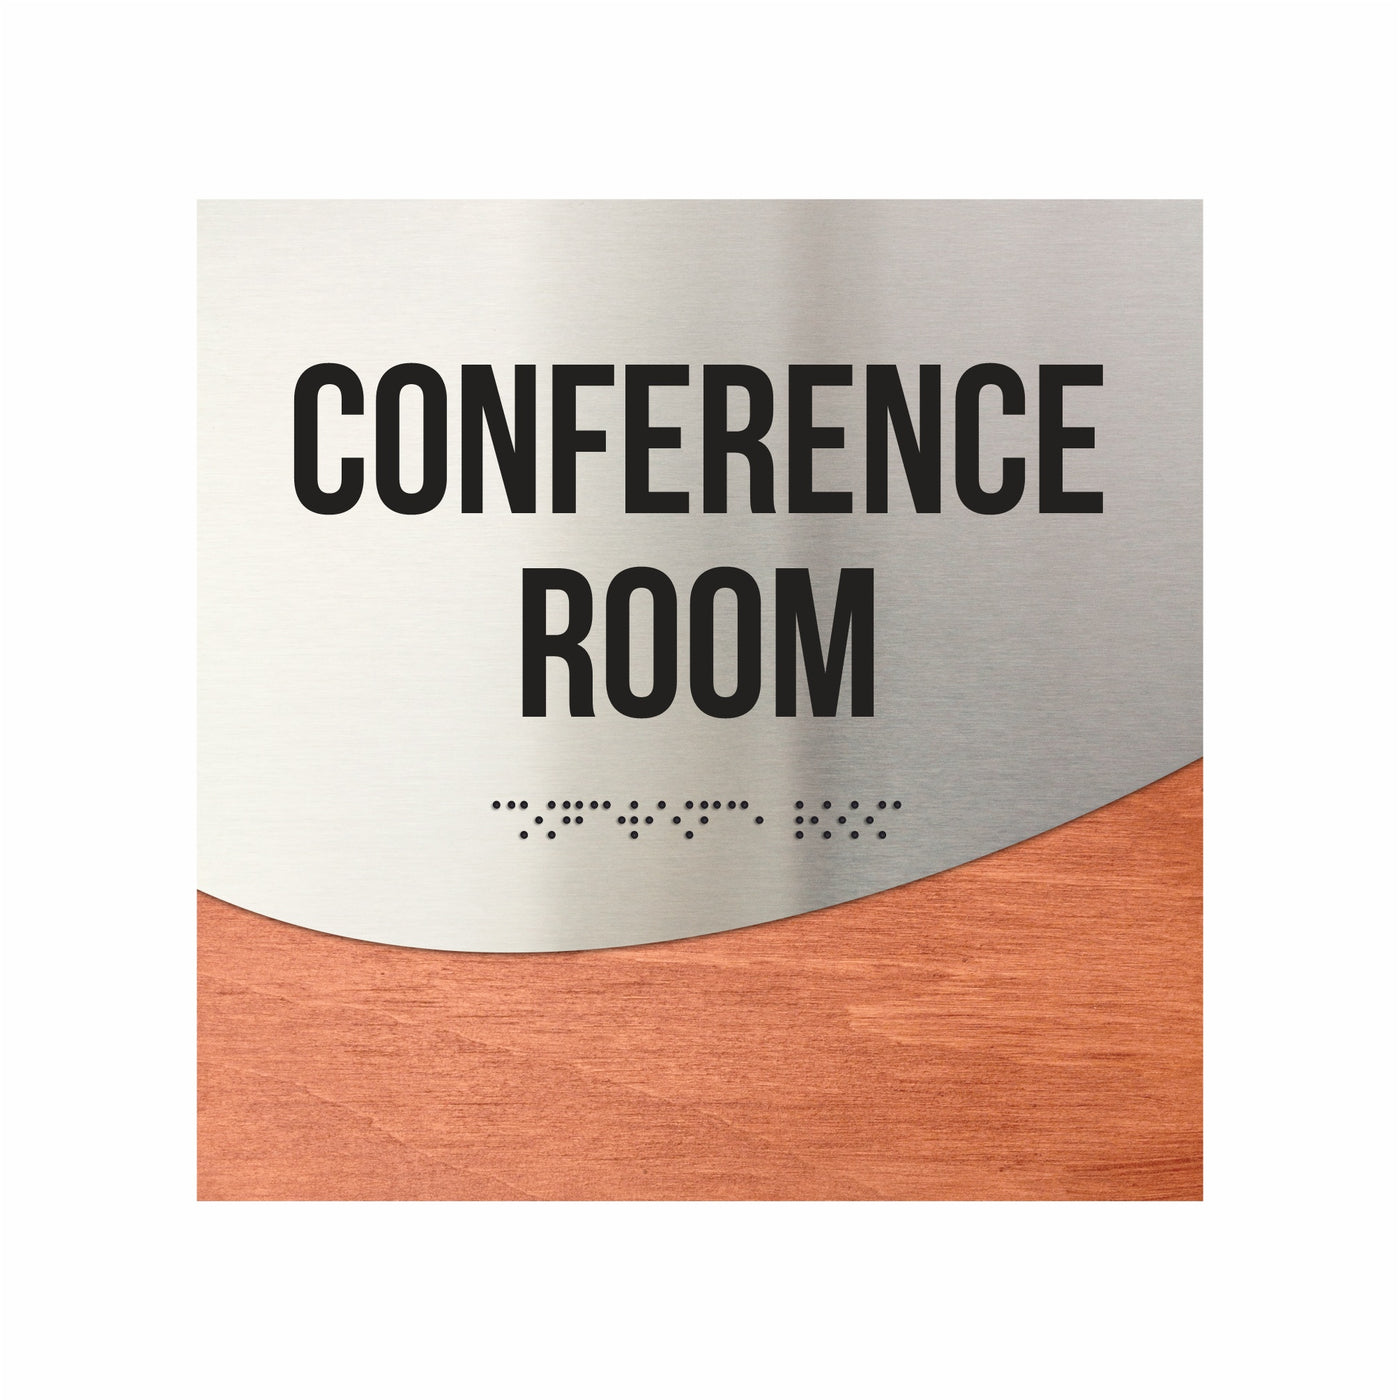 Conference Room Signs - Stainless Steel & Wood Door Plate "Jure" Design